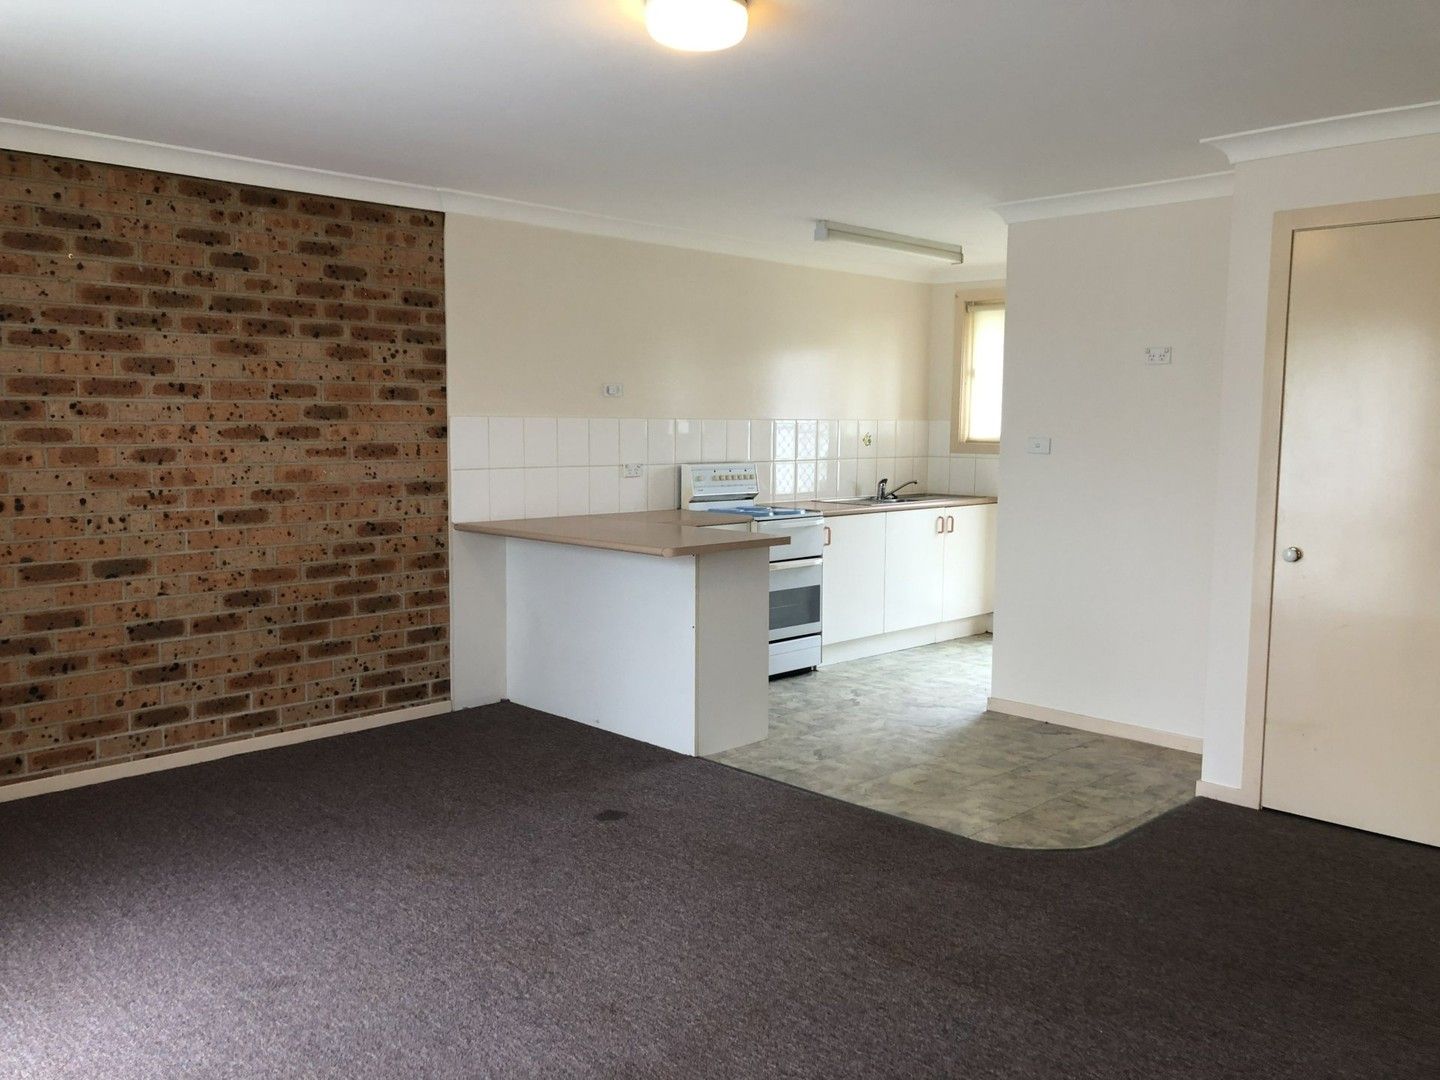 2 bedrooms Apartment / Unit / Flat in 2/20 Mudford Street TAREE NSW, 2430